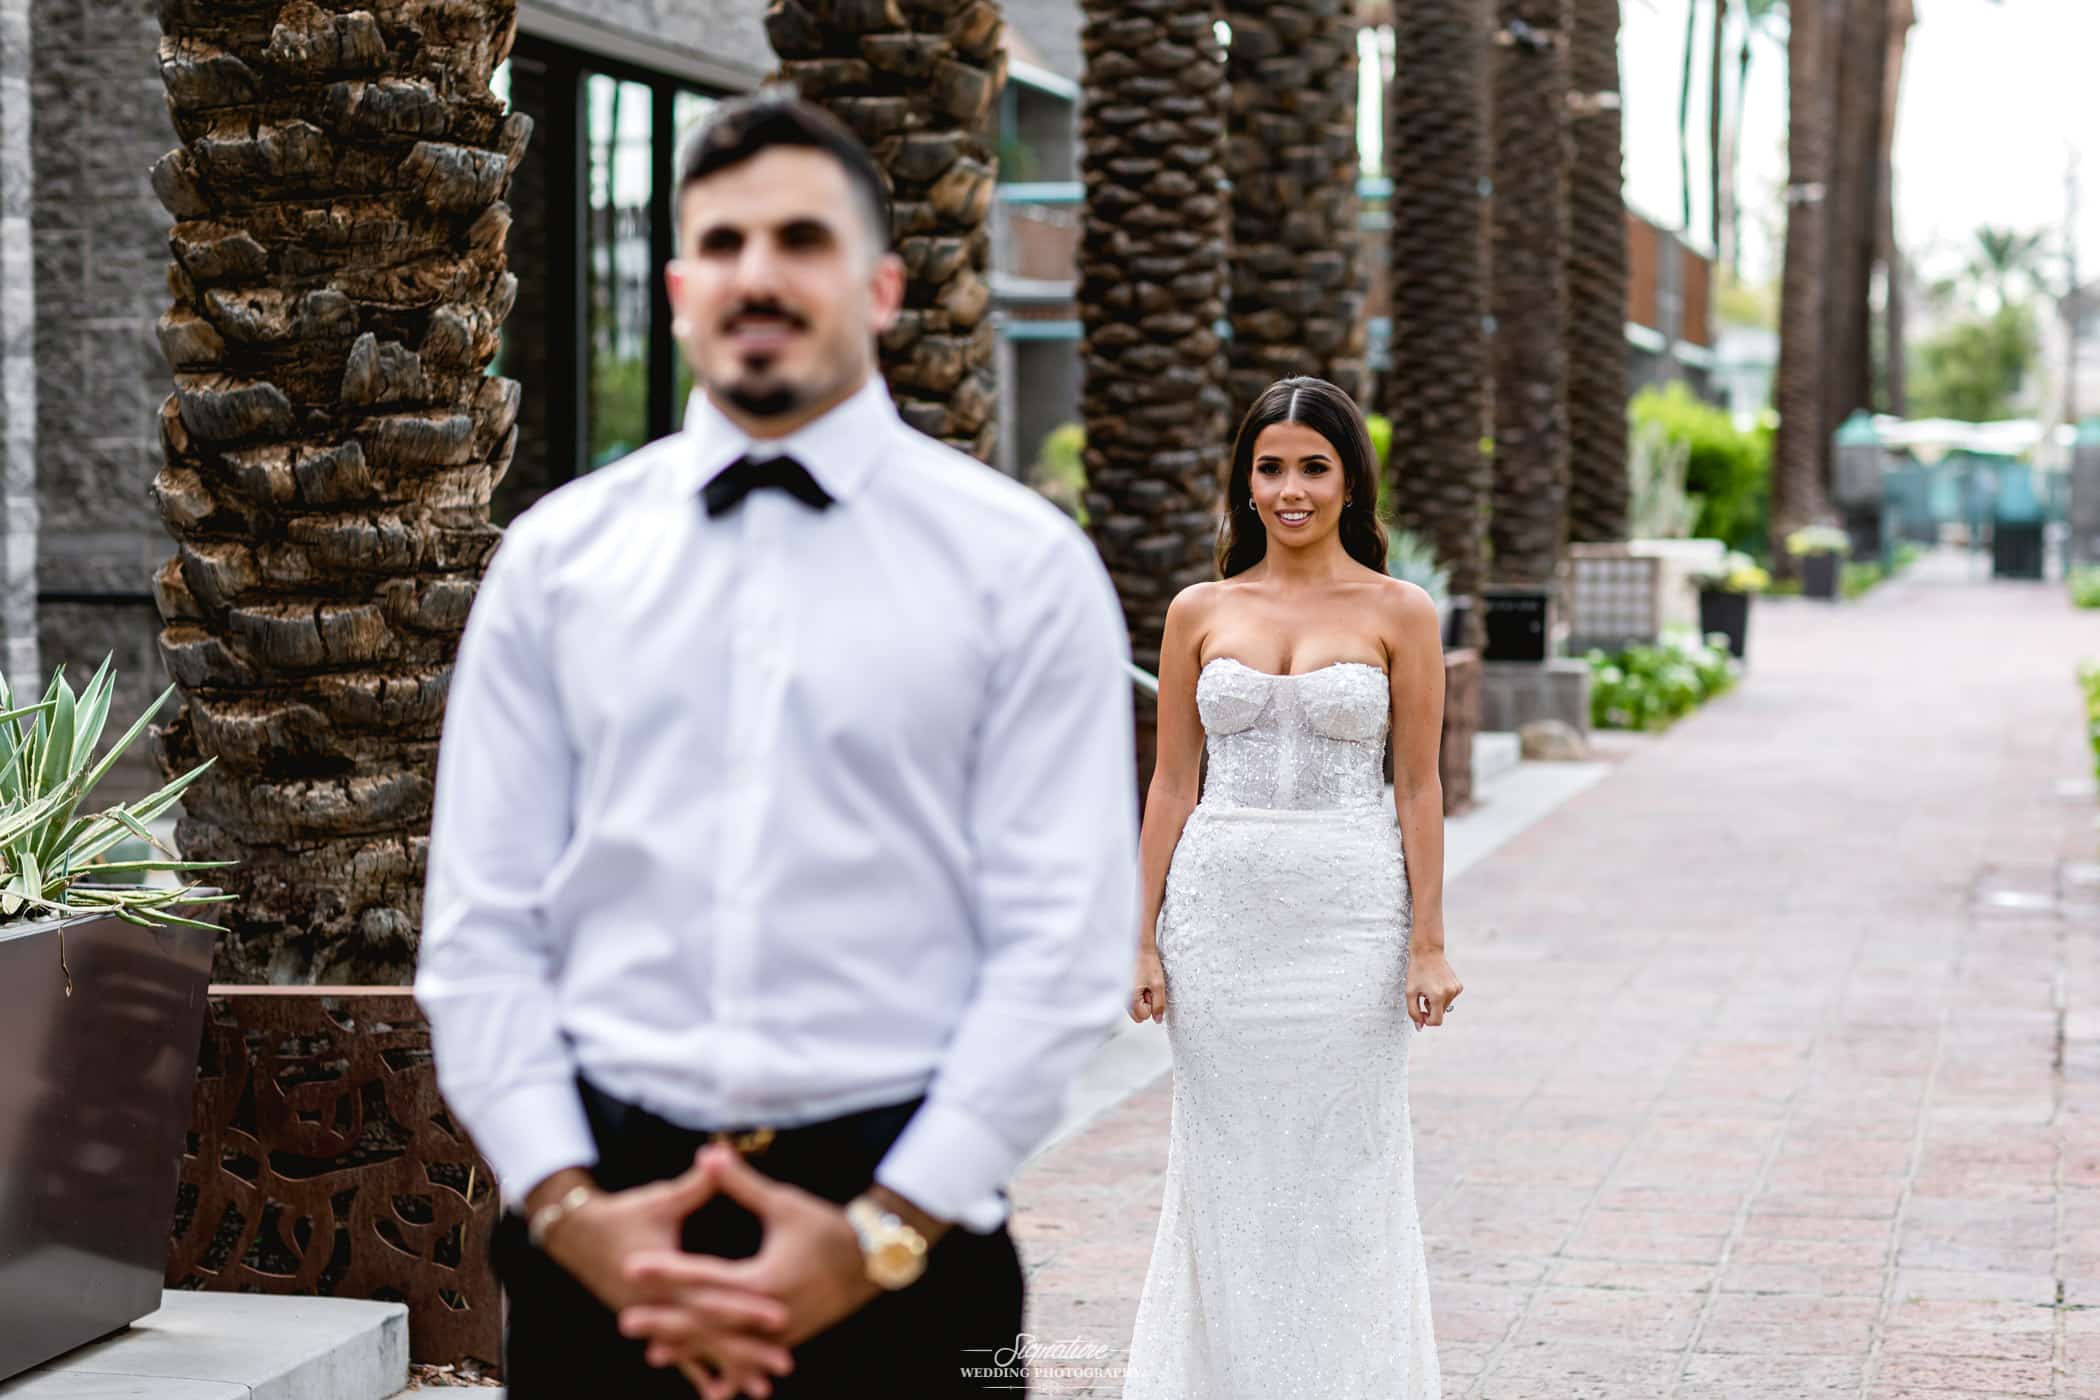 Bride standing behind groom for first look